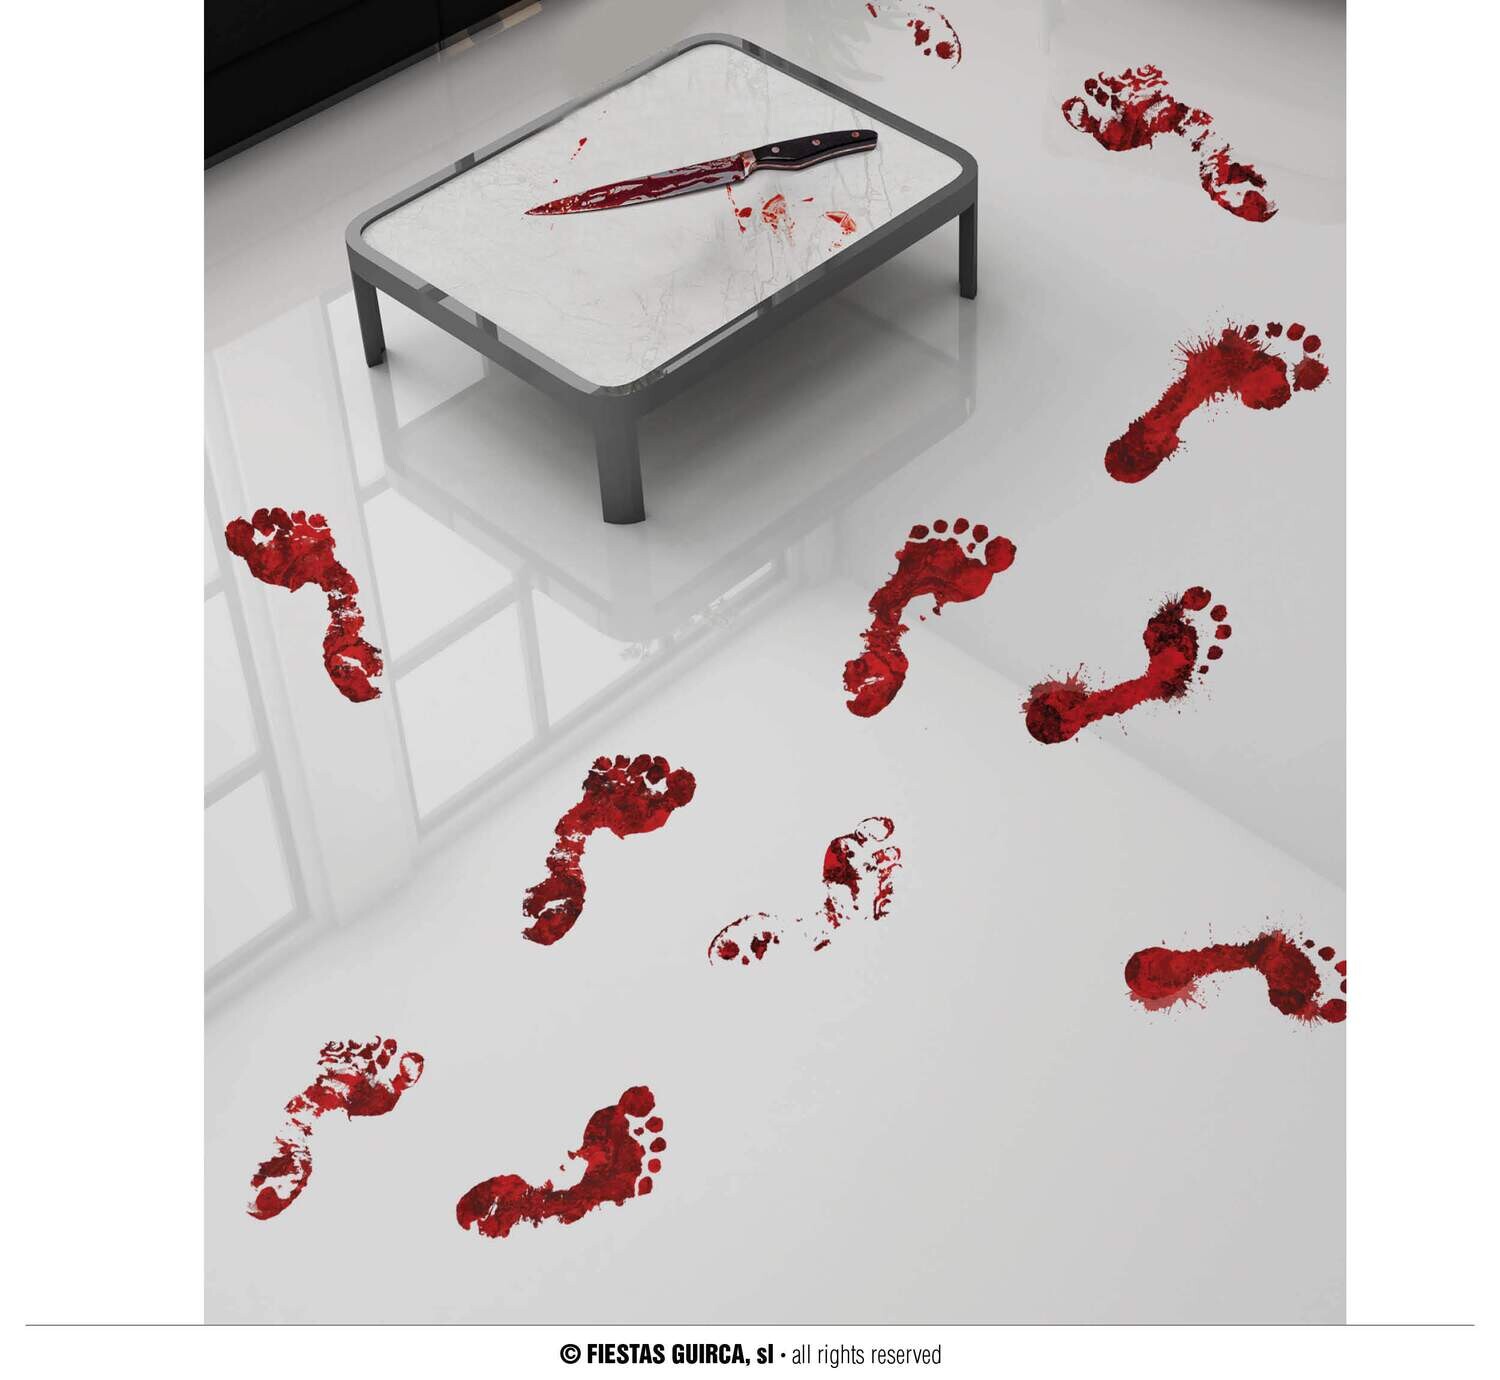 Adhesive blood footprints 2x25x70cm